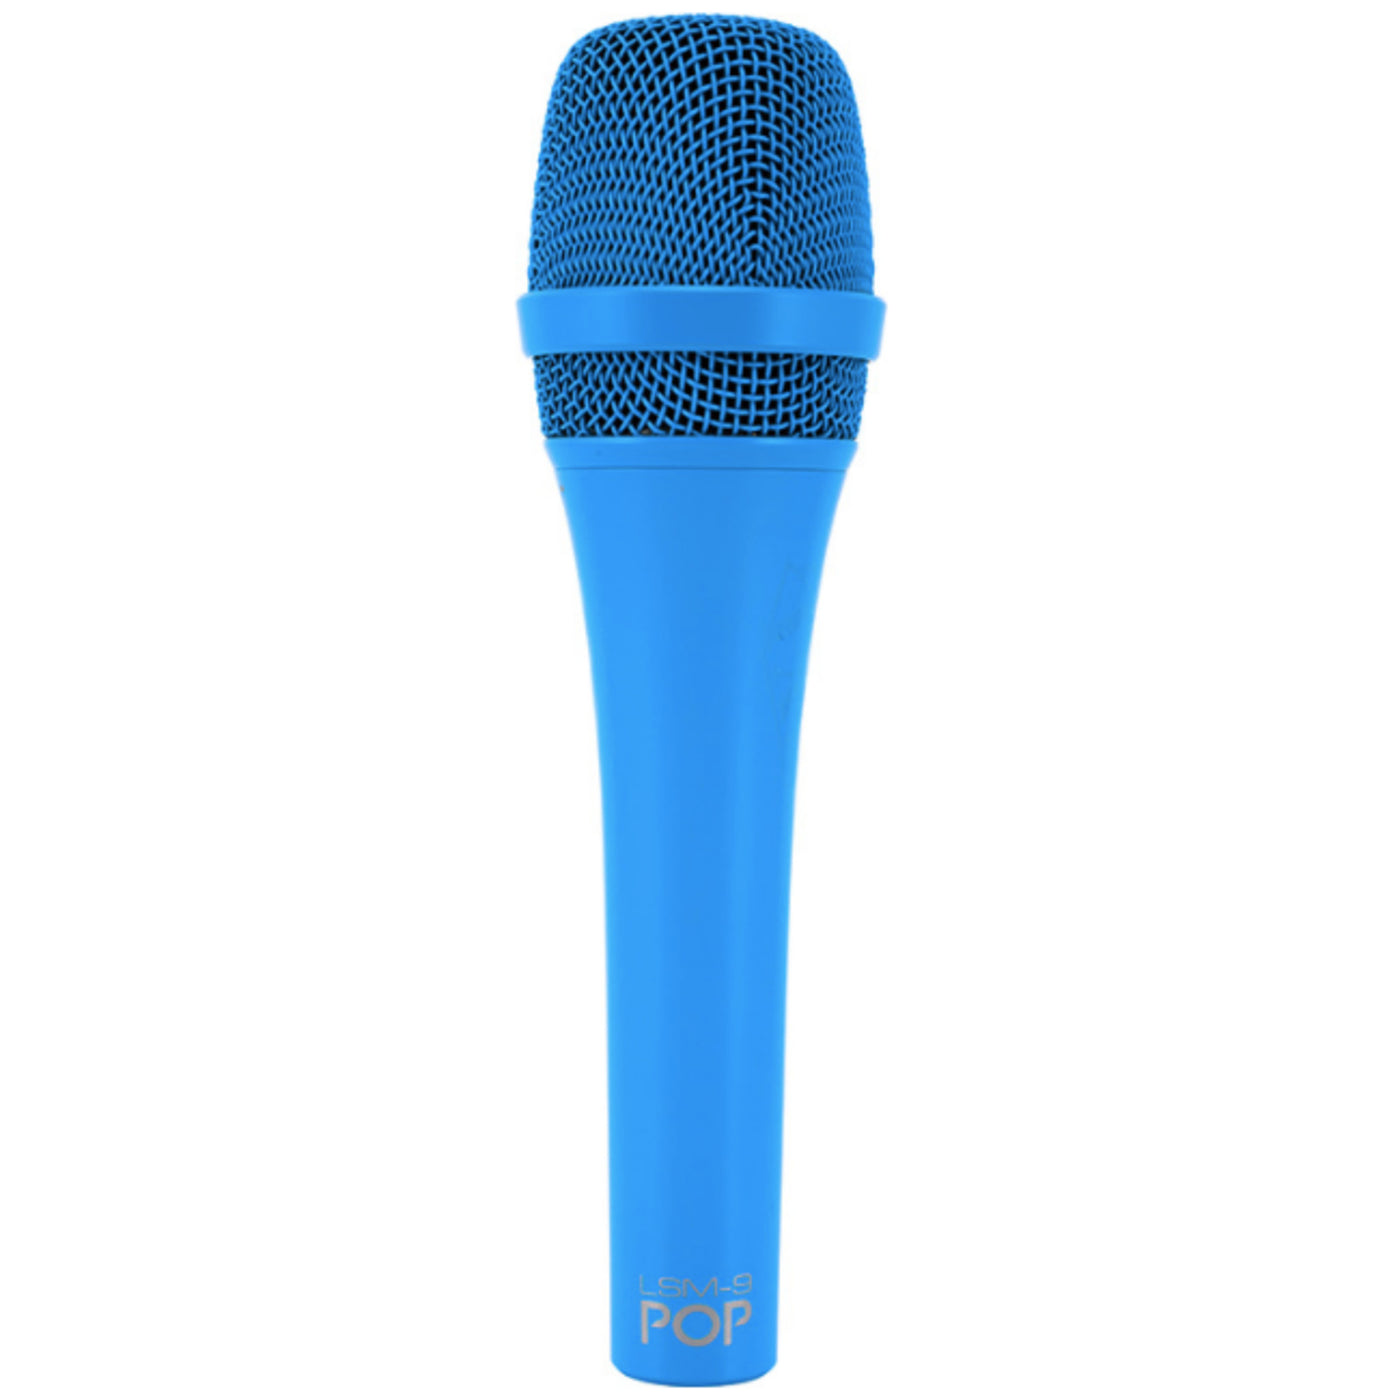 MXL LSM-9 Premium Dynamic Vocal Microphone - Pop Blue